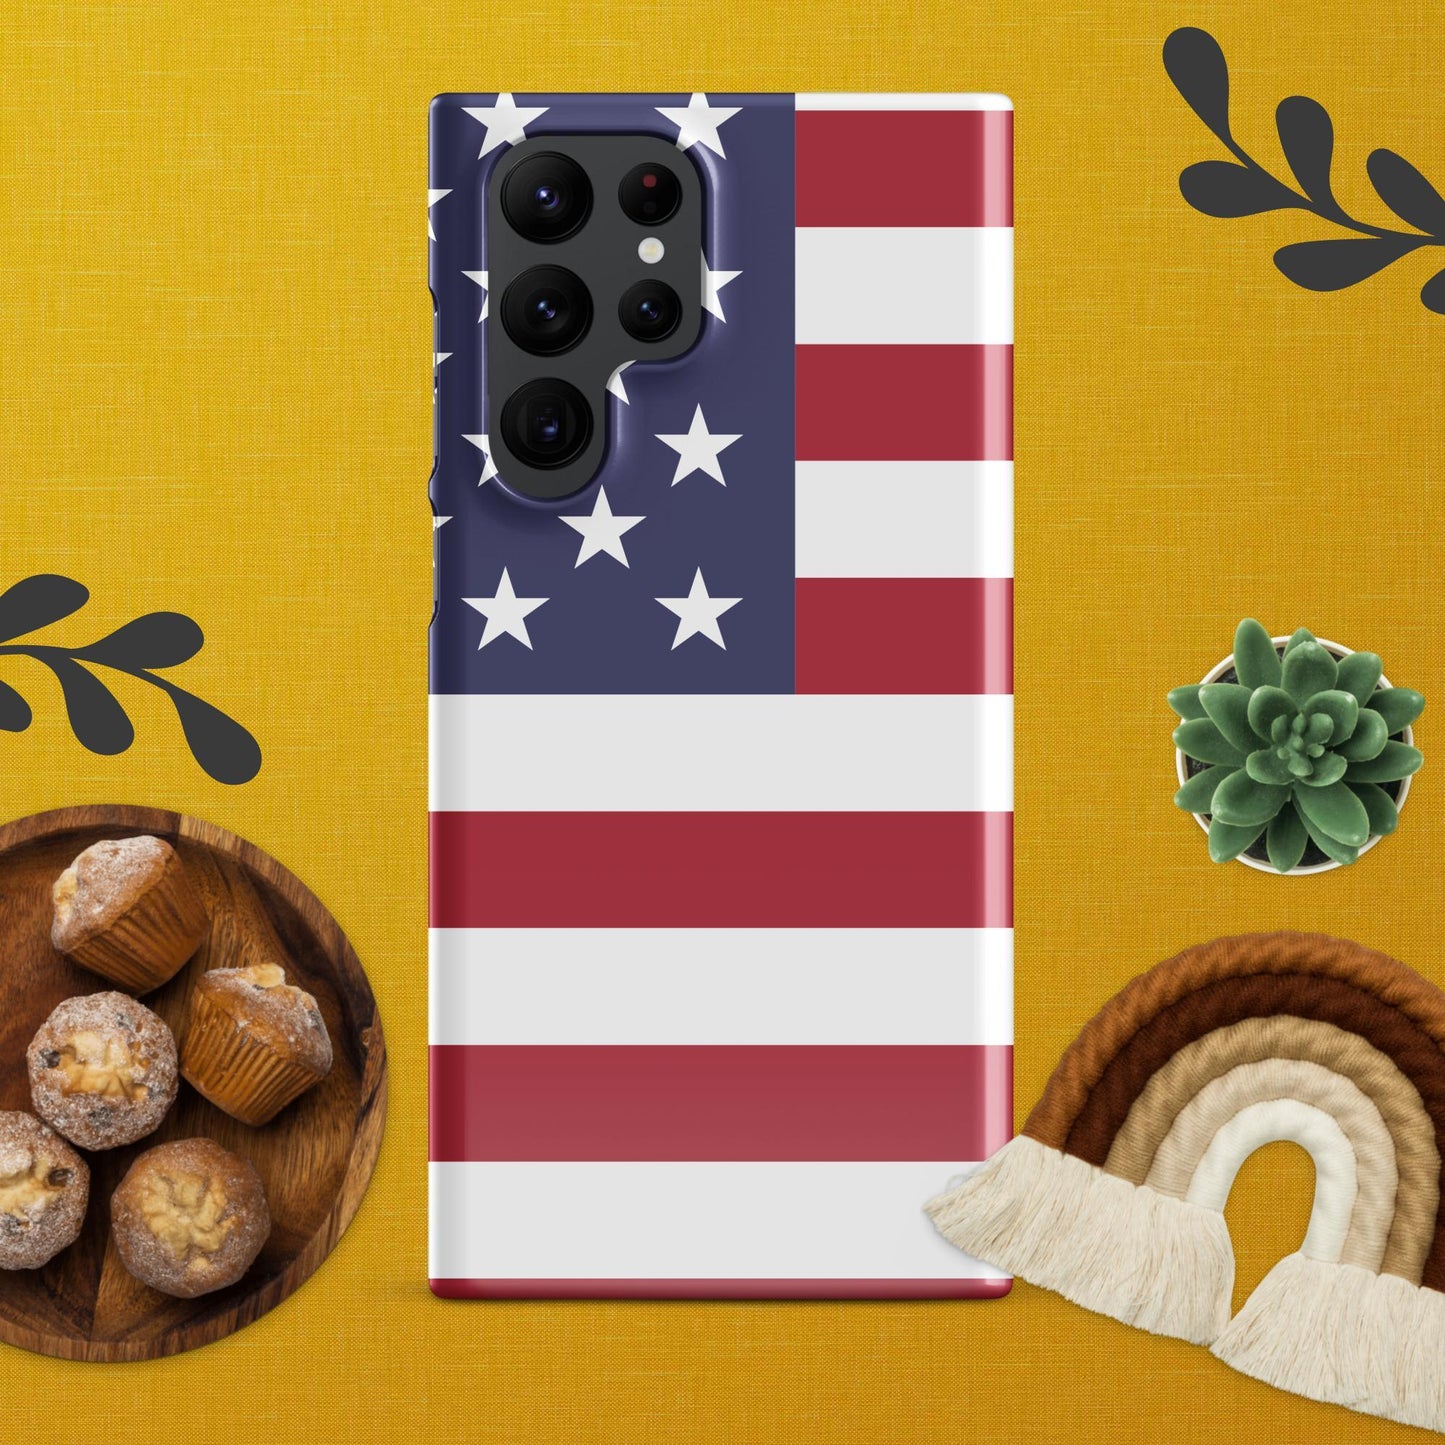 Showcase Your Patriotism with the American Flag Snap Case for Samsung® - Lizard Vigilante